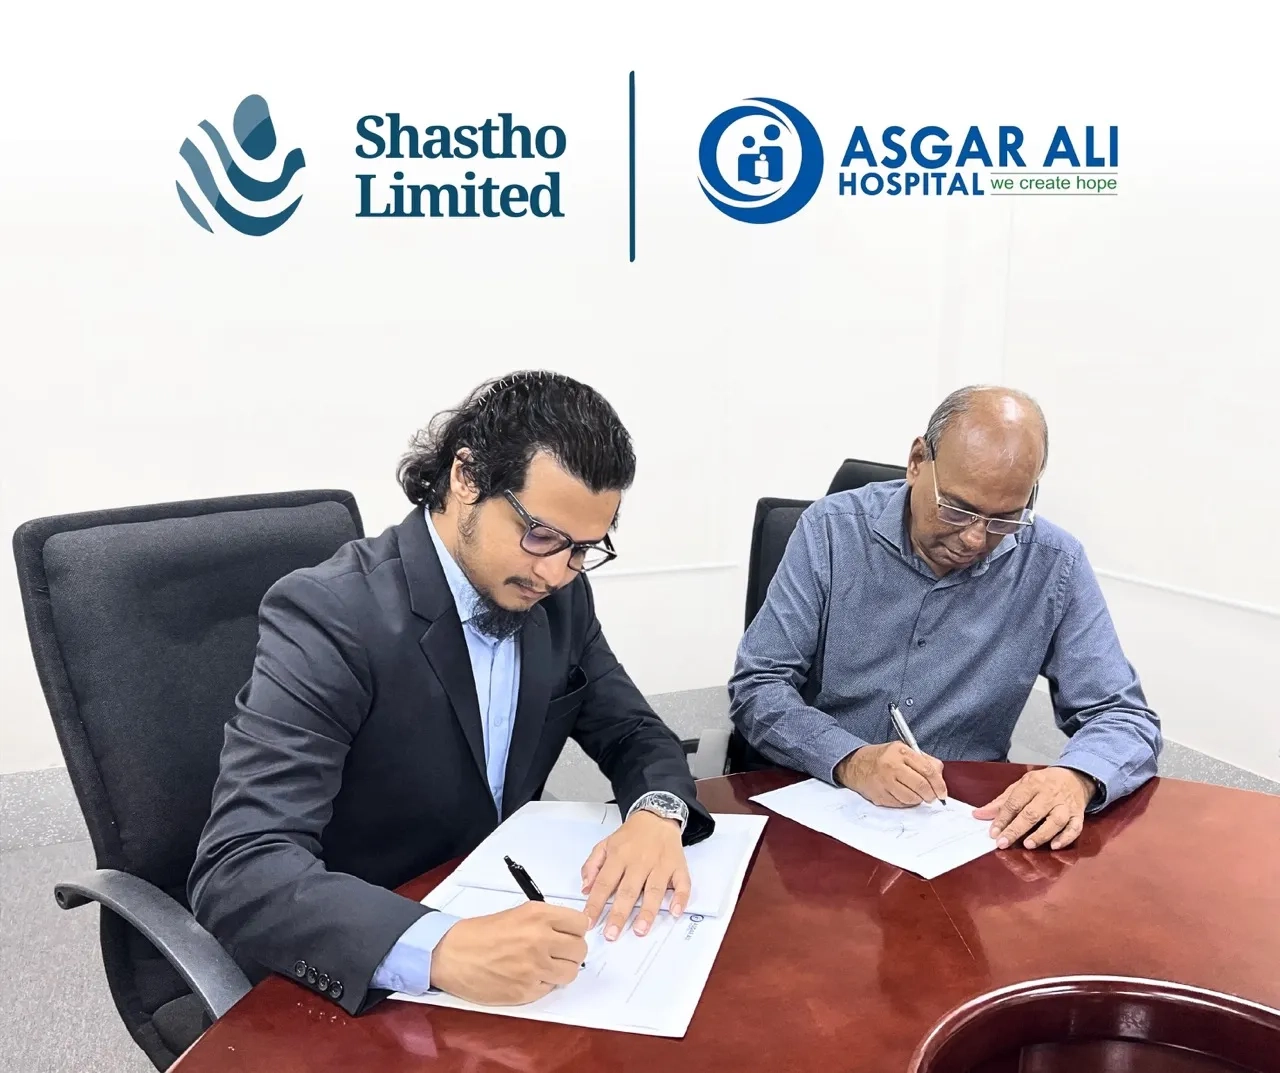 Partnership with Asgar Ali Hospital